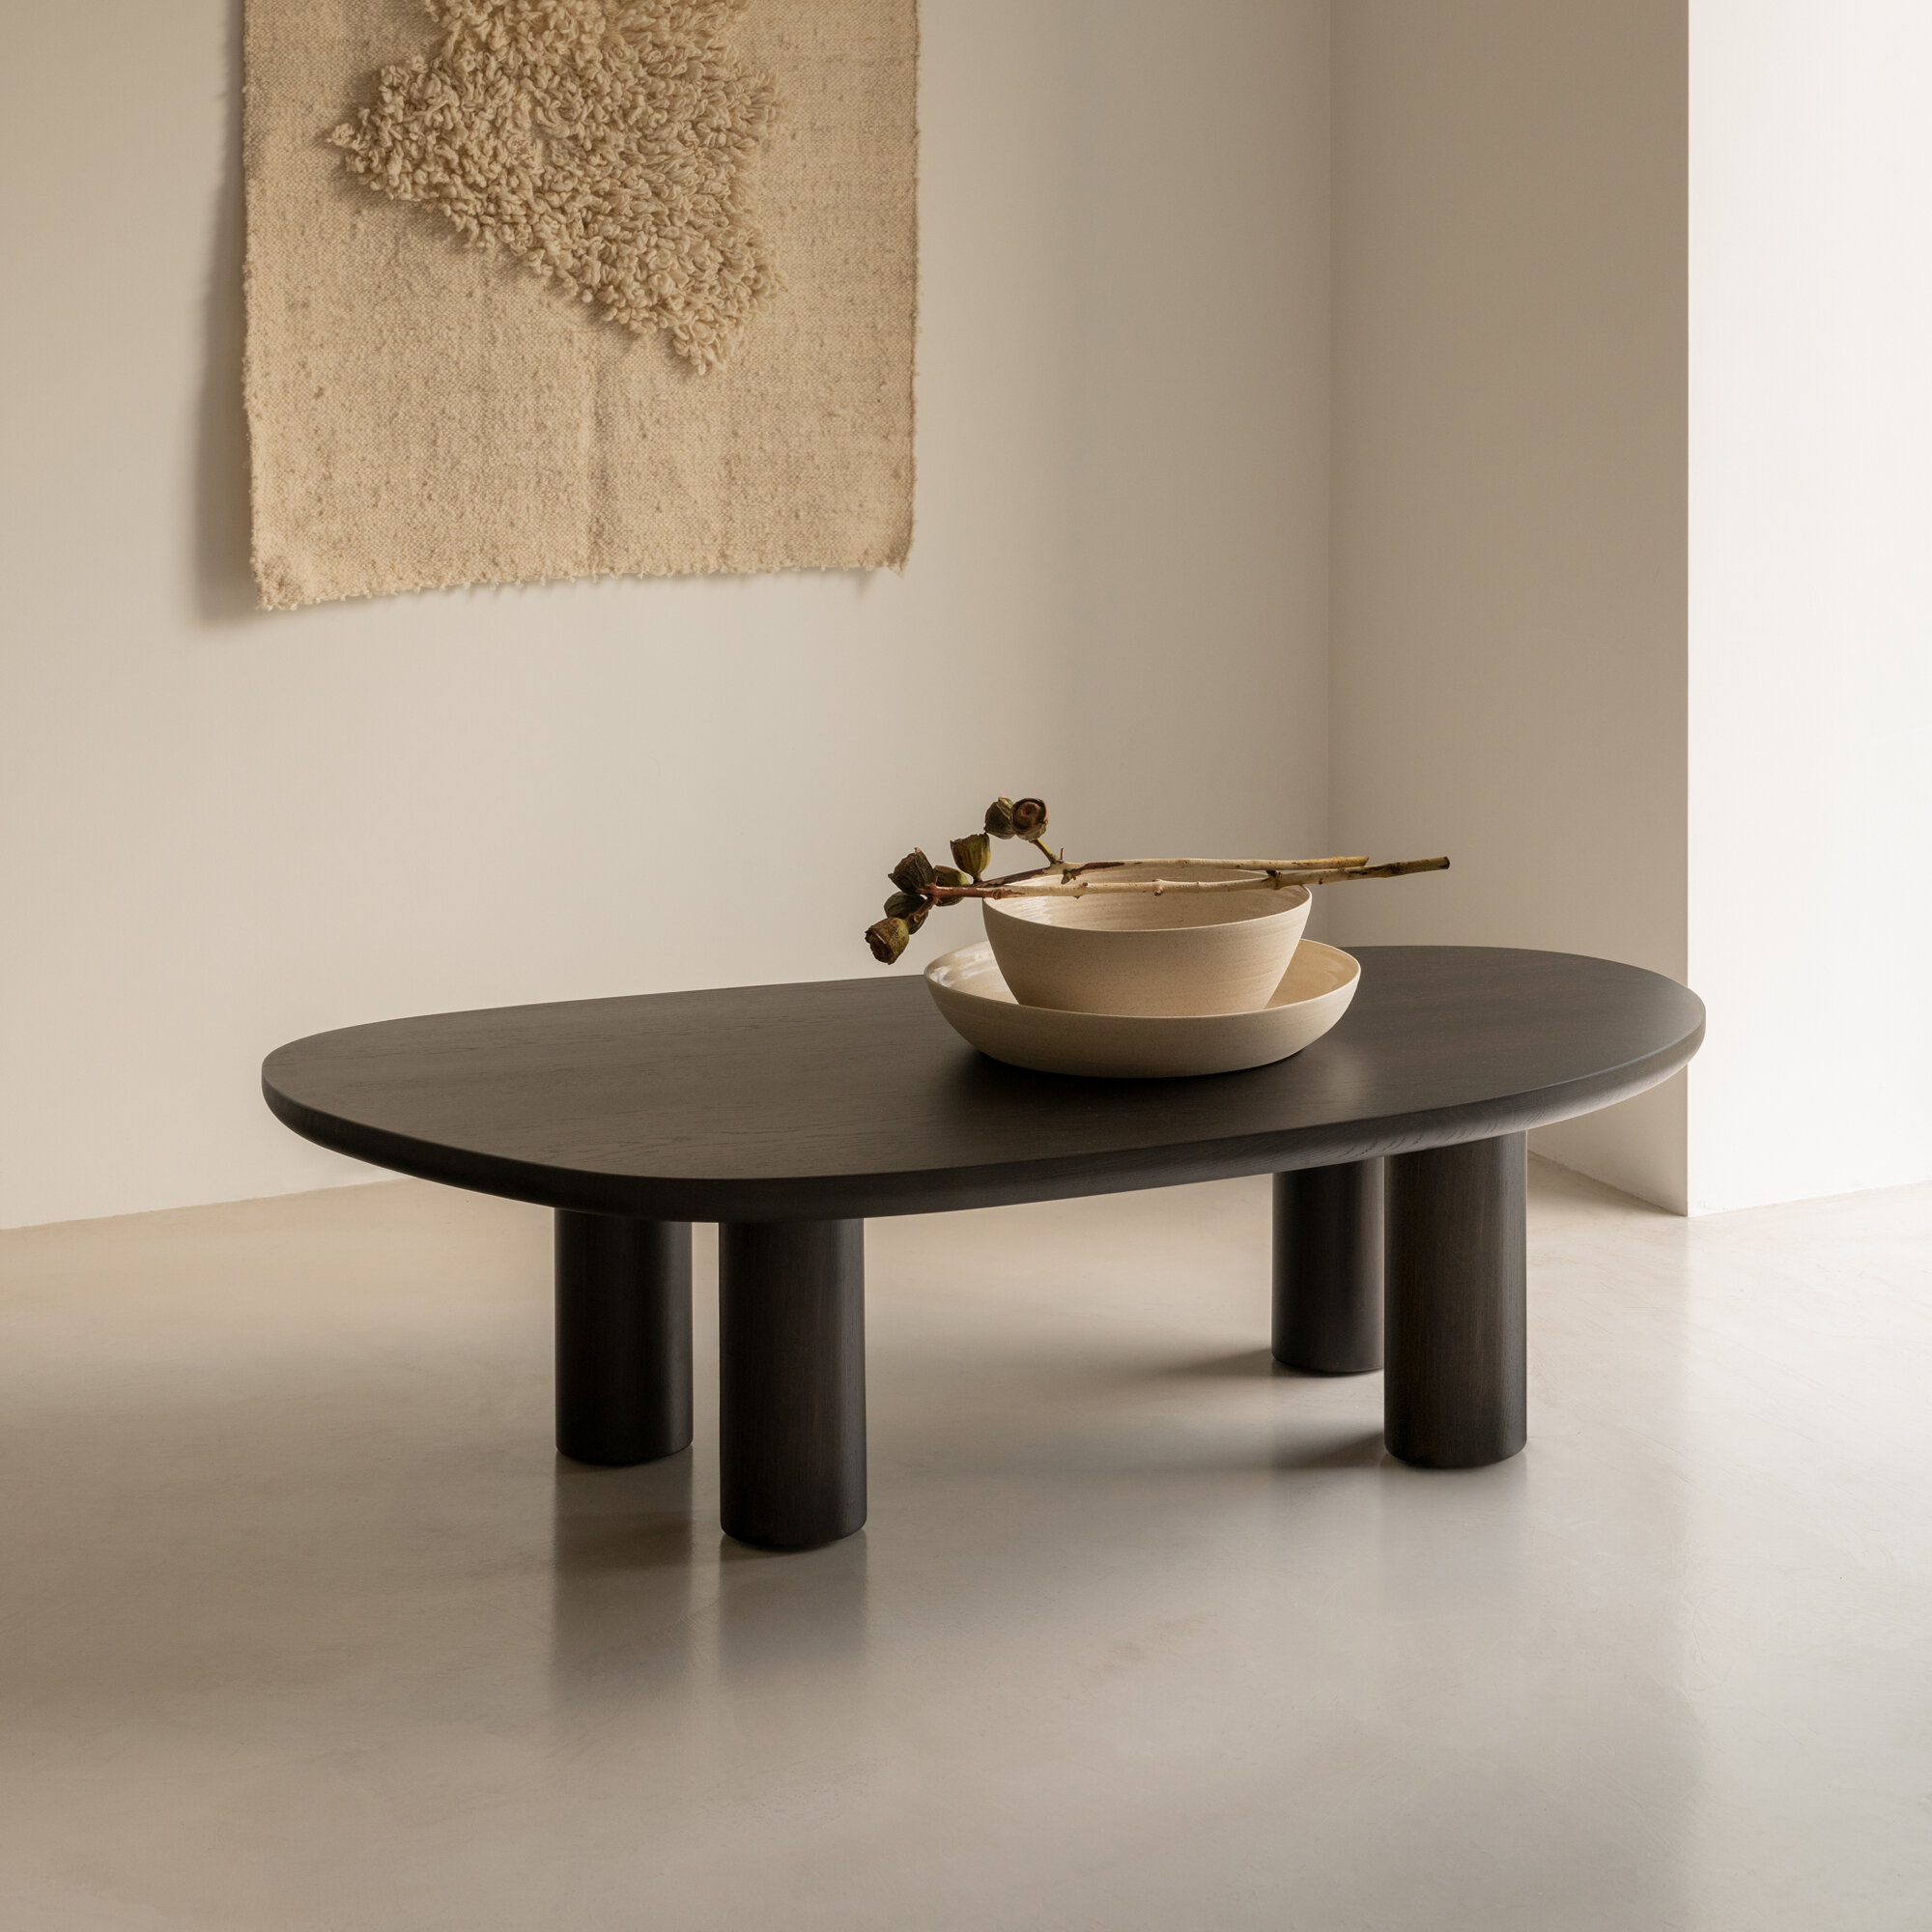 Design Coffee Table | Blob Coffee Table Oak hardwax oil natural light 3041 | Oak hardwax oil natural light 3041 | Studio HENK| 